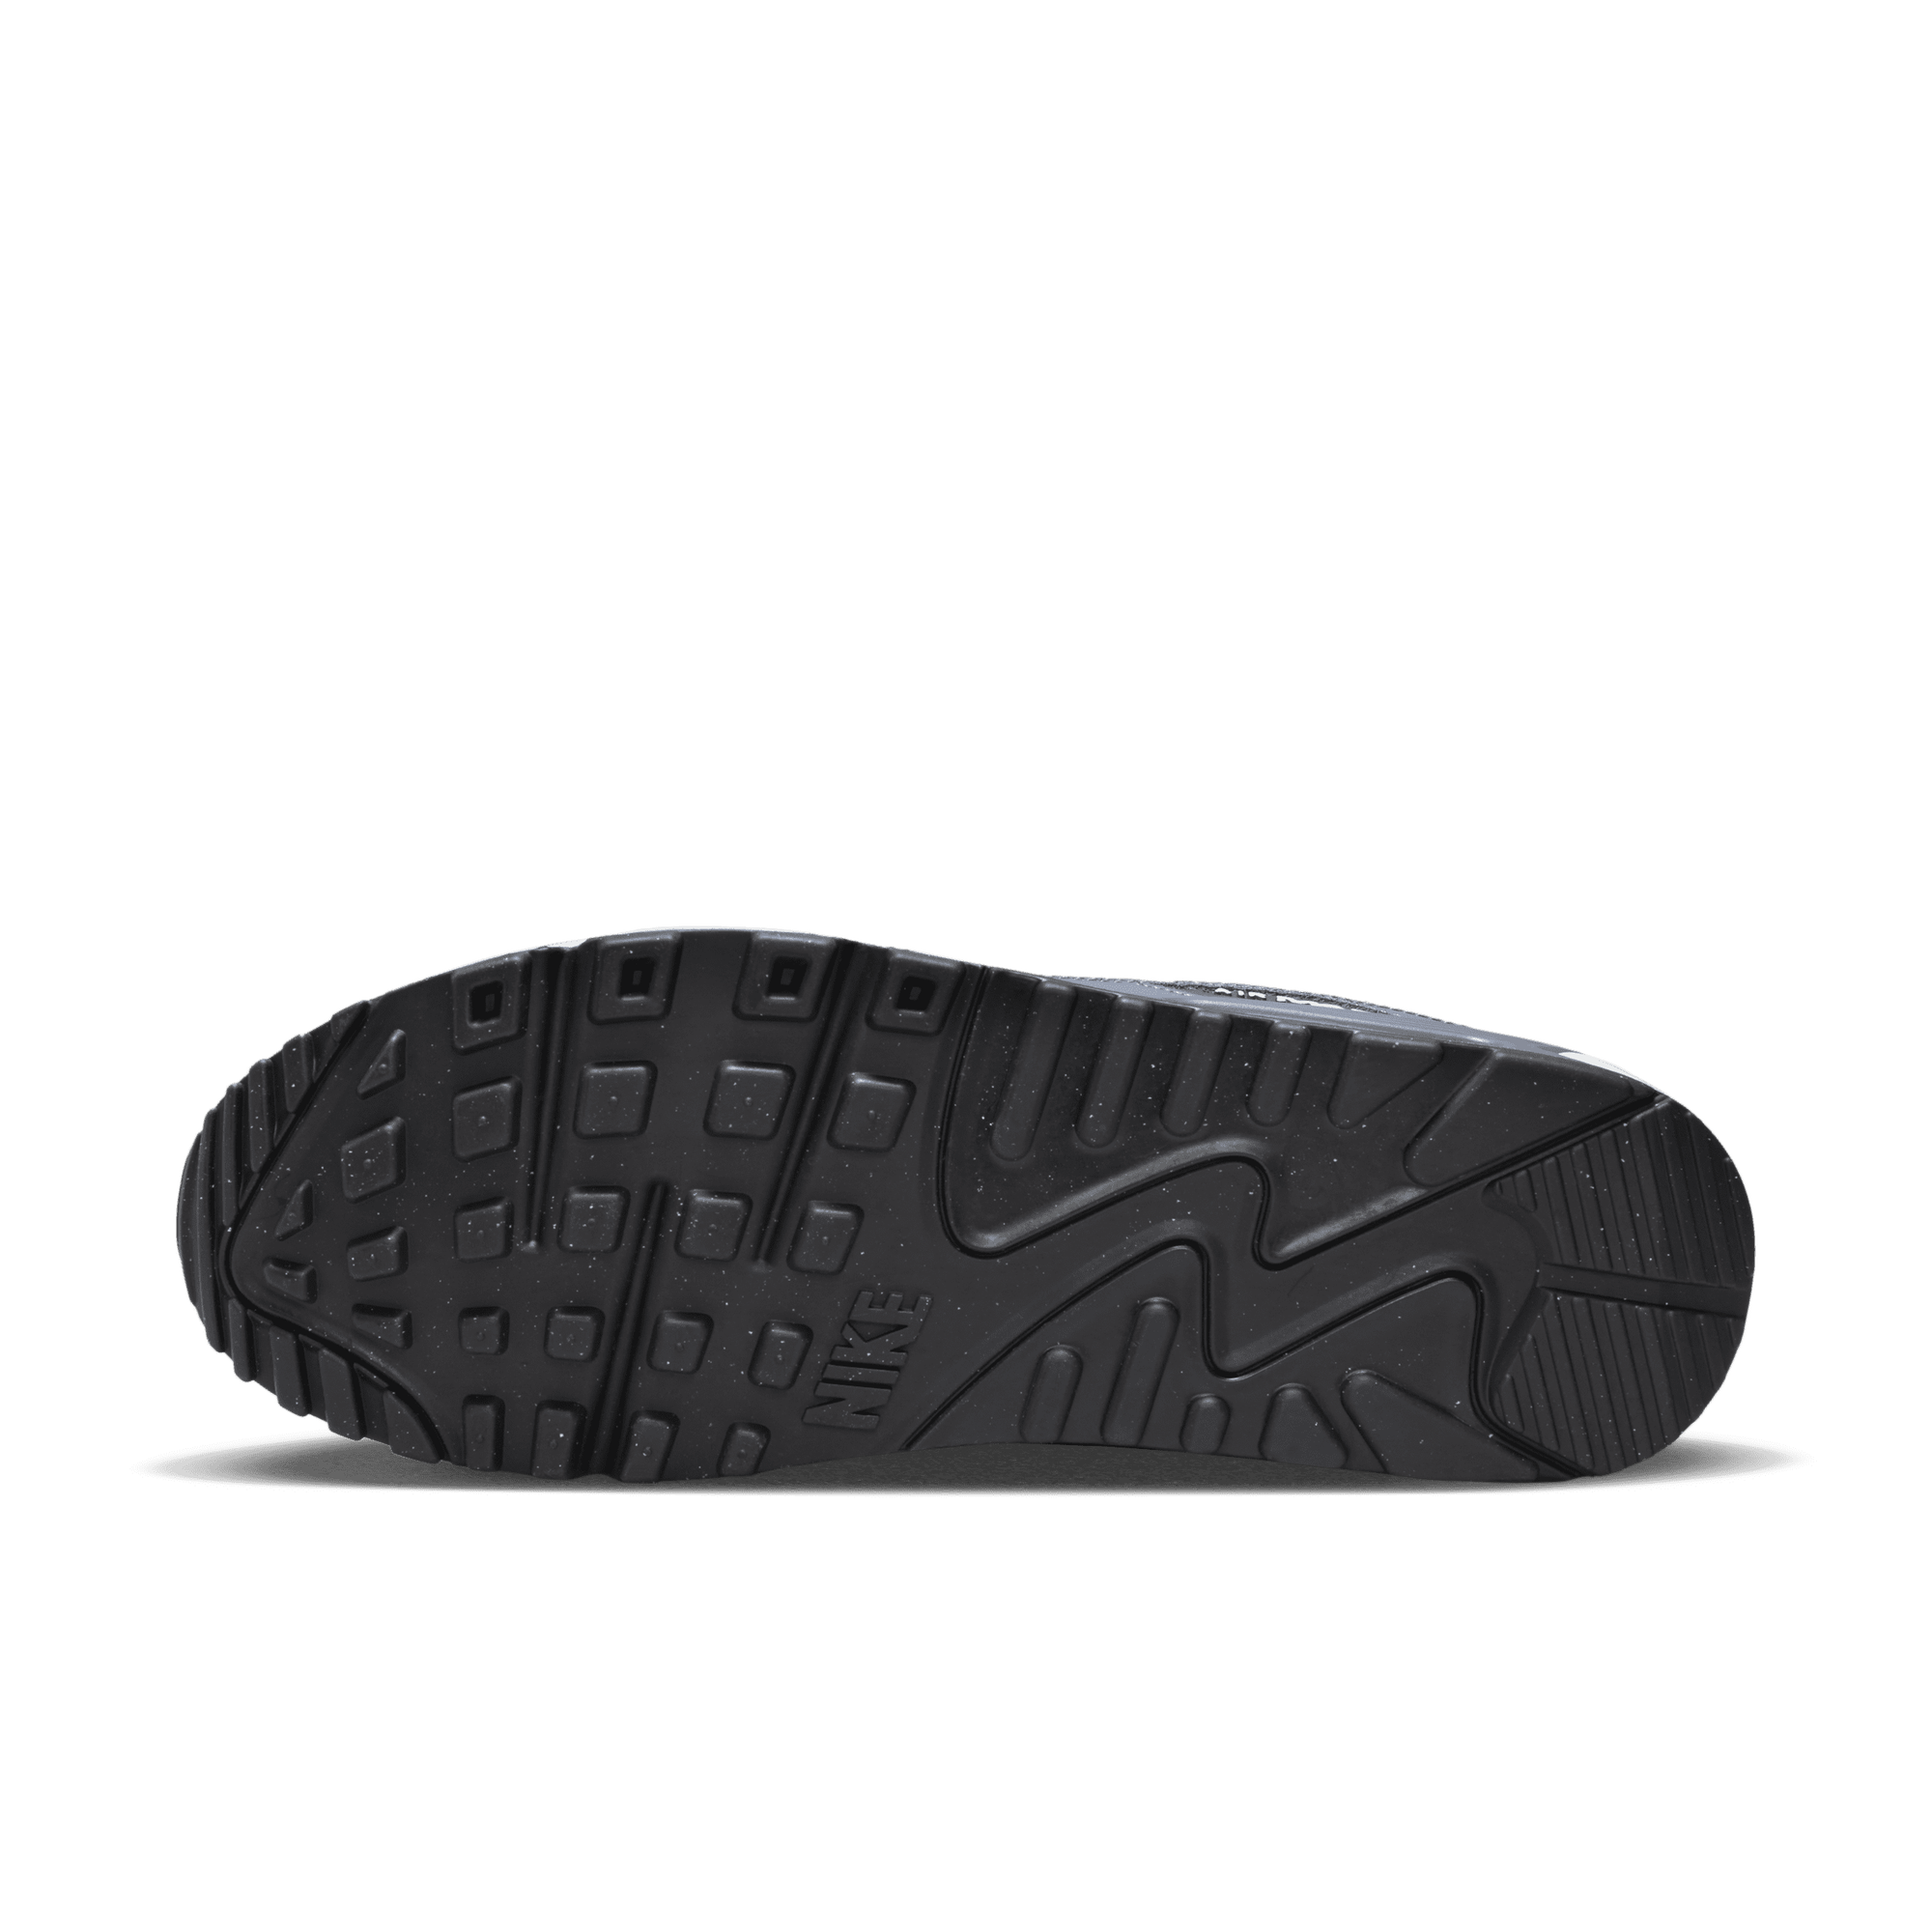 Shop Air Max 90 Men's Shoes | Nike KSA